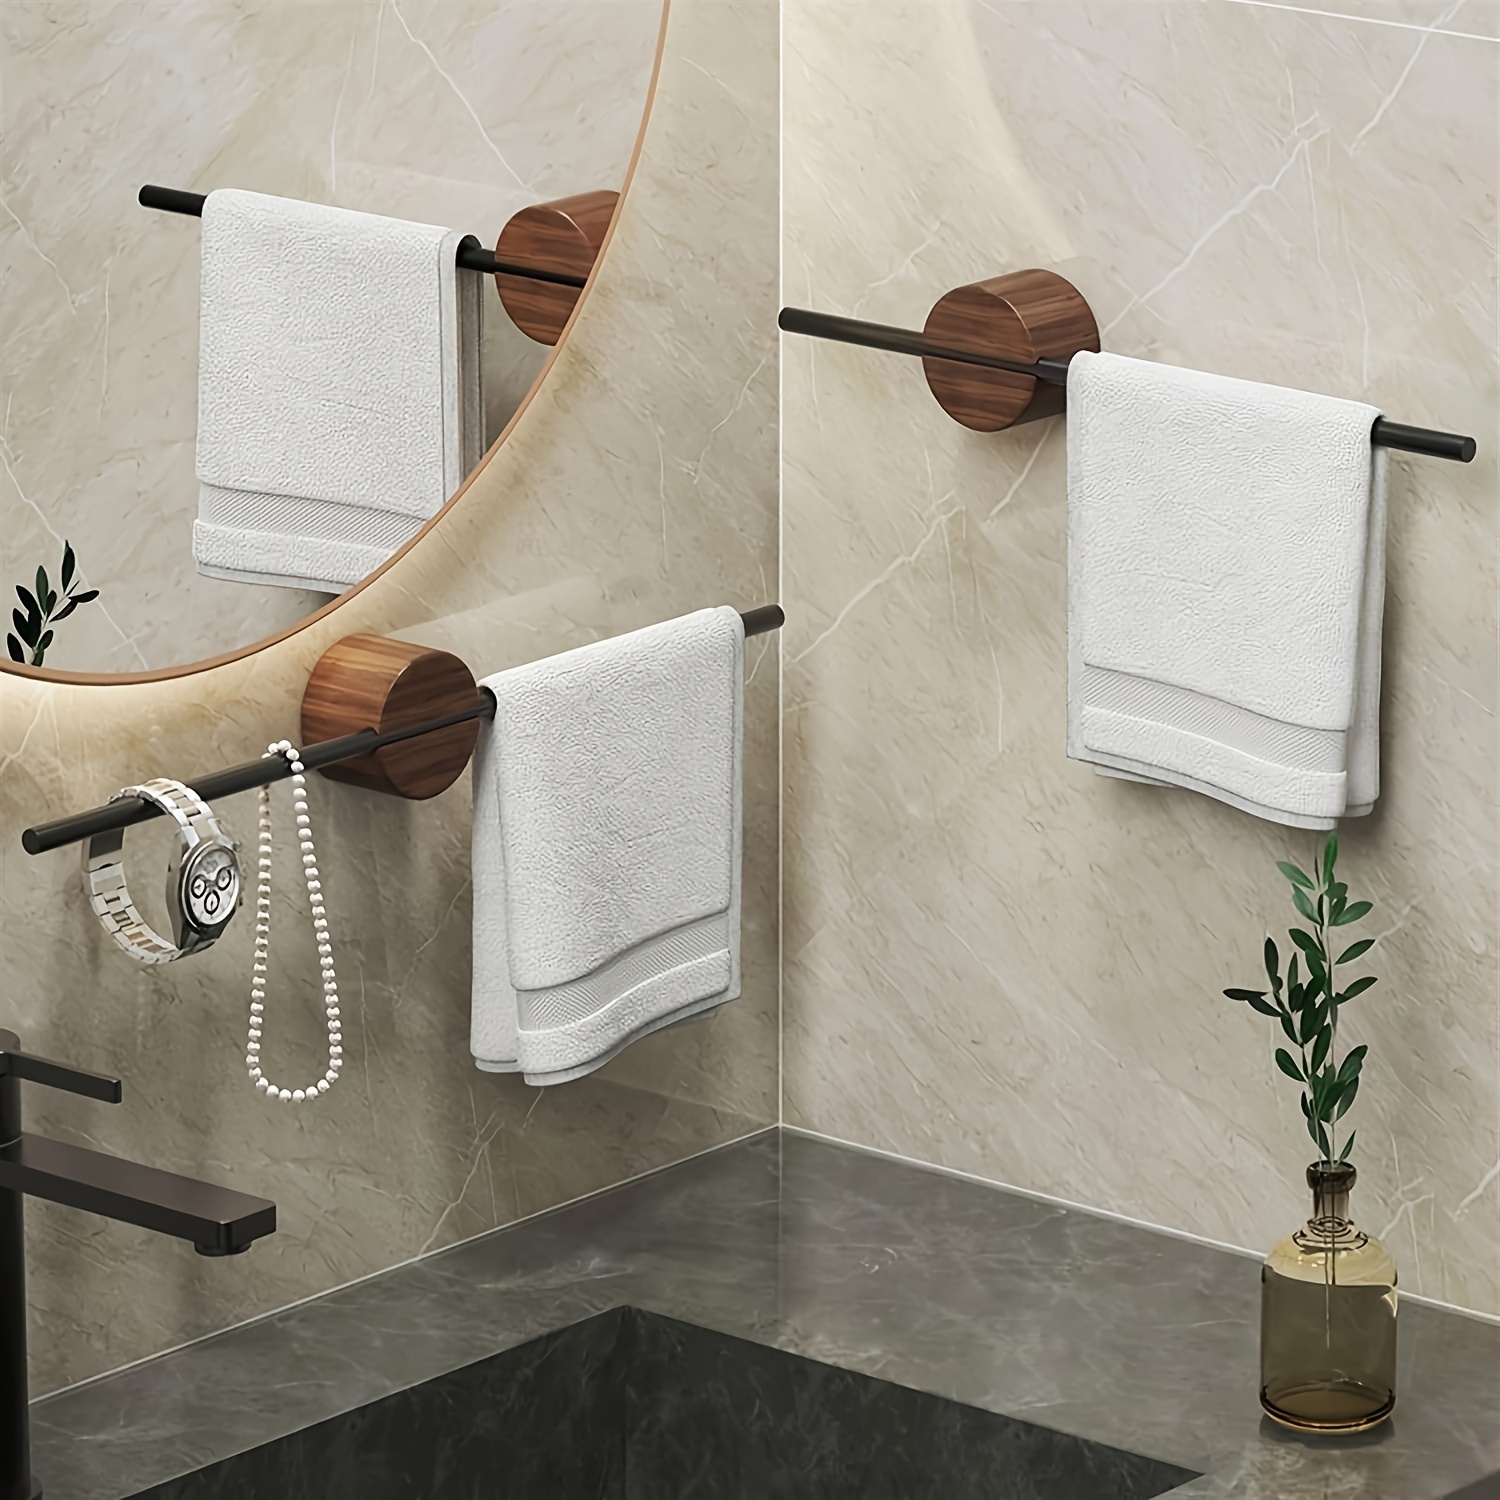 

Luxury Style Stainless Steel Towel Rack - Wall Mounted Single Bath Towel Holder For Bathroom & Kitchen, Wood/metal, Multi-room Storage Solution, Bathroom Accessories & Decor - 1pc